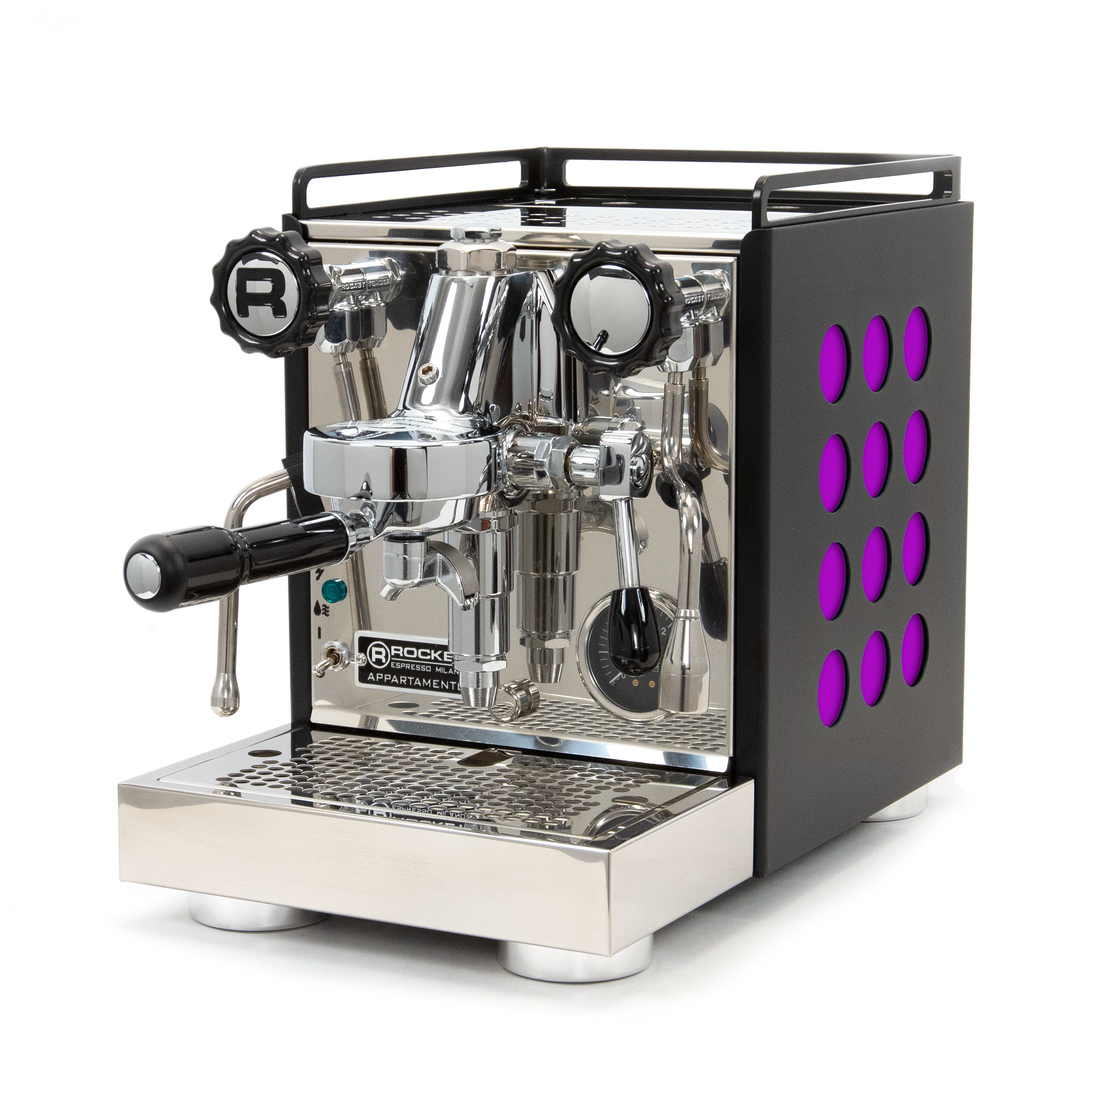 Rocket Espresso Appartamento Serie Nera Espresso Machine - Amethyst